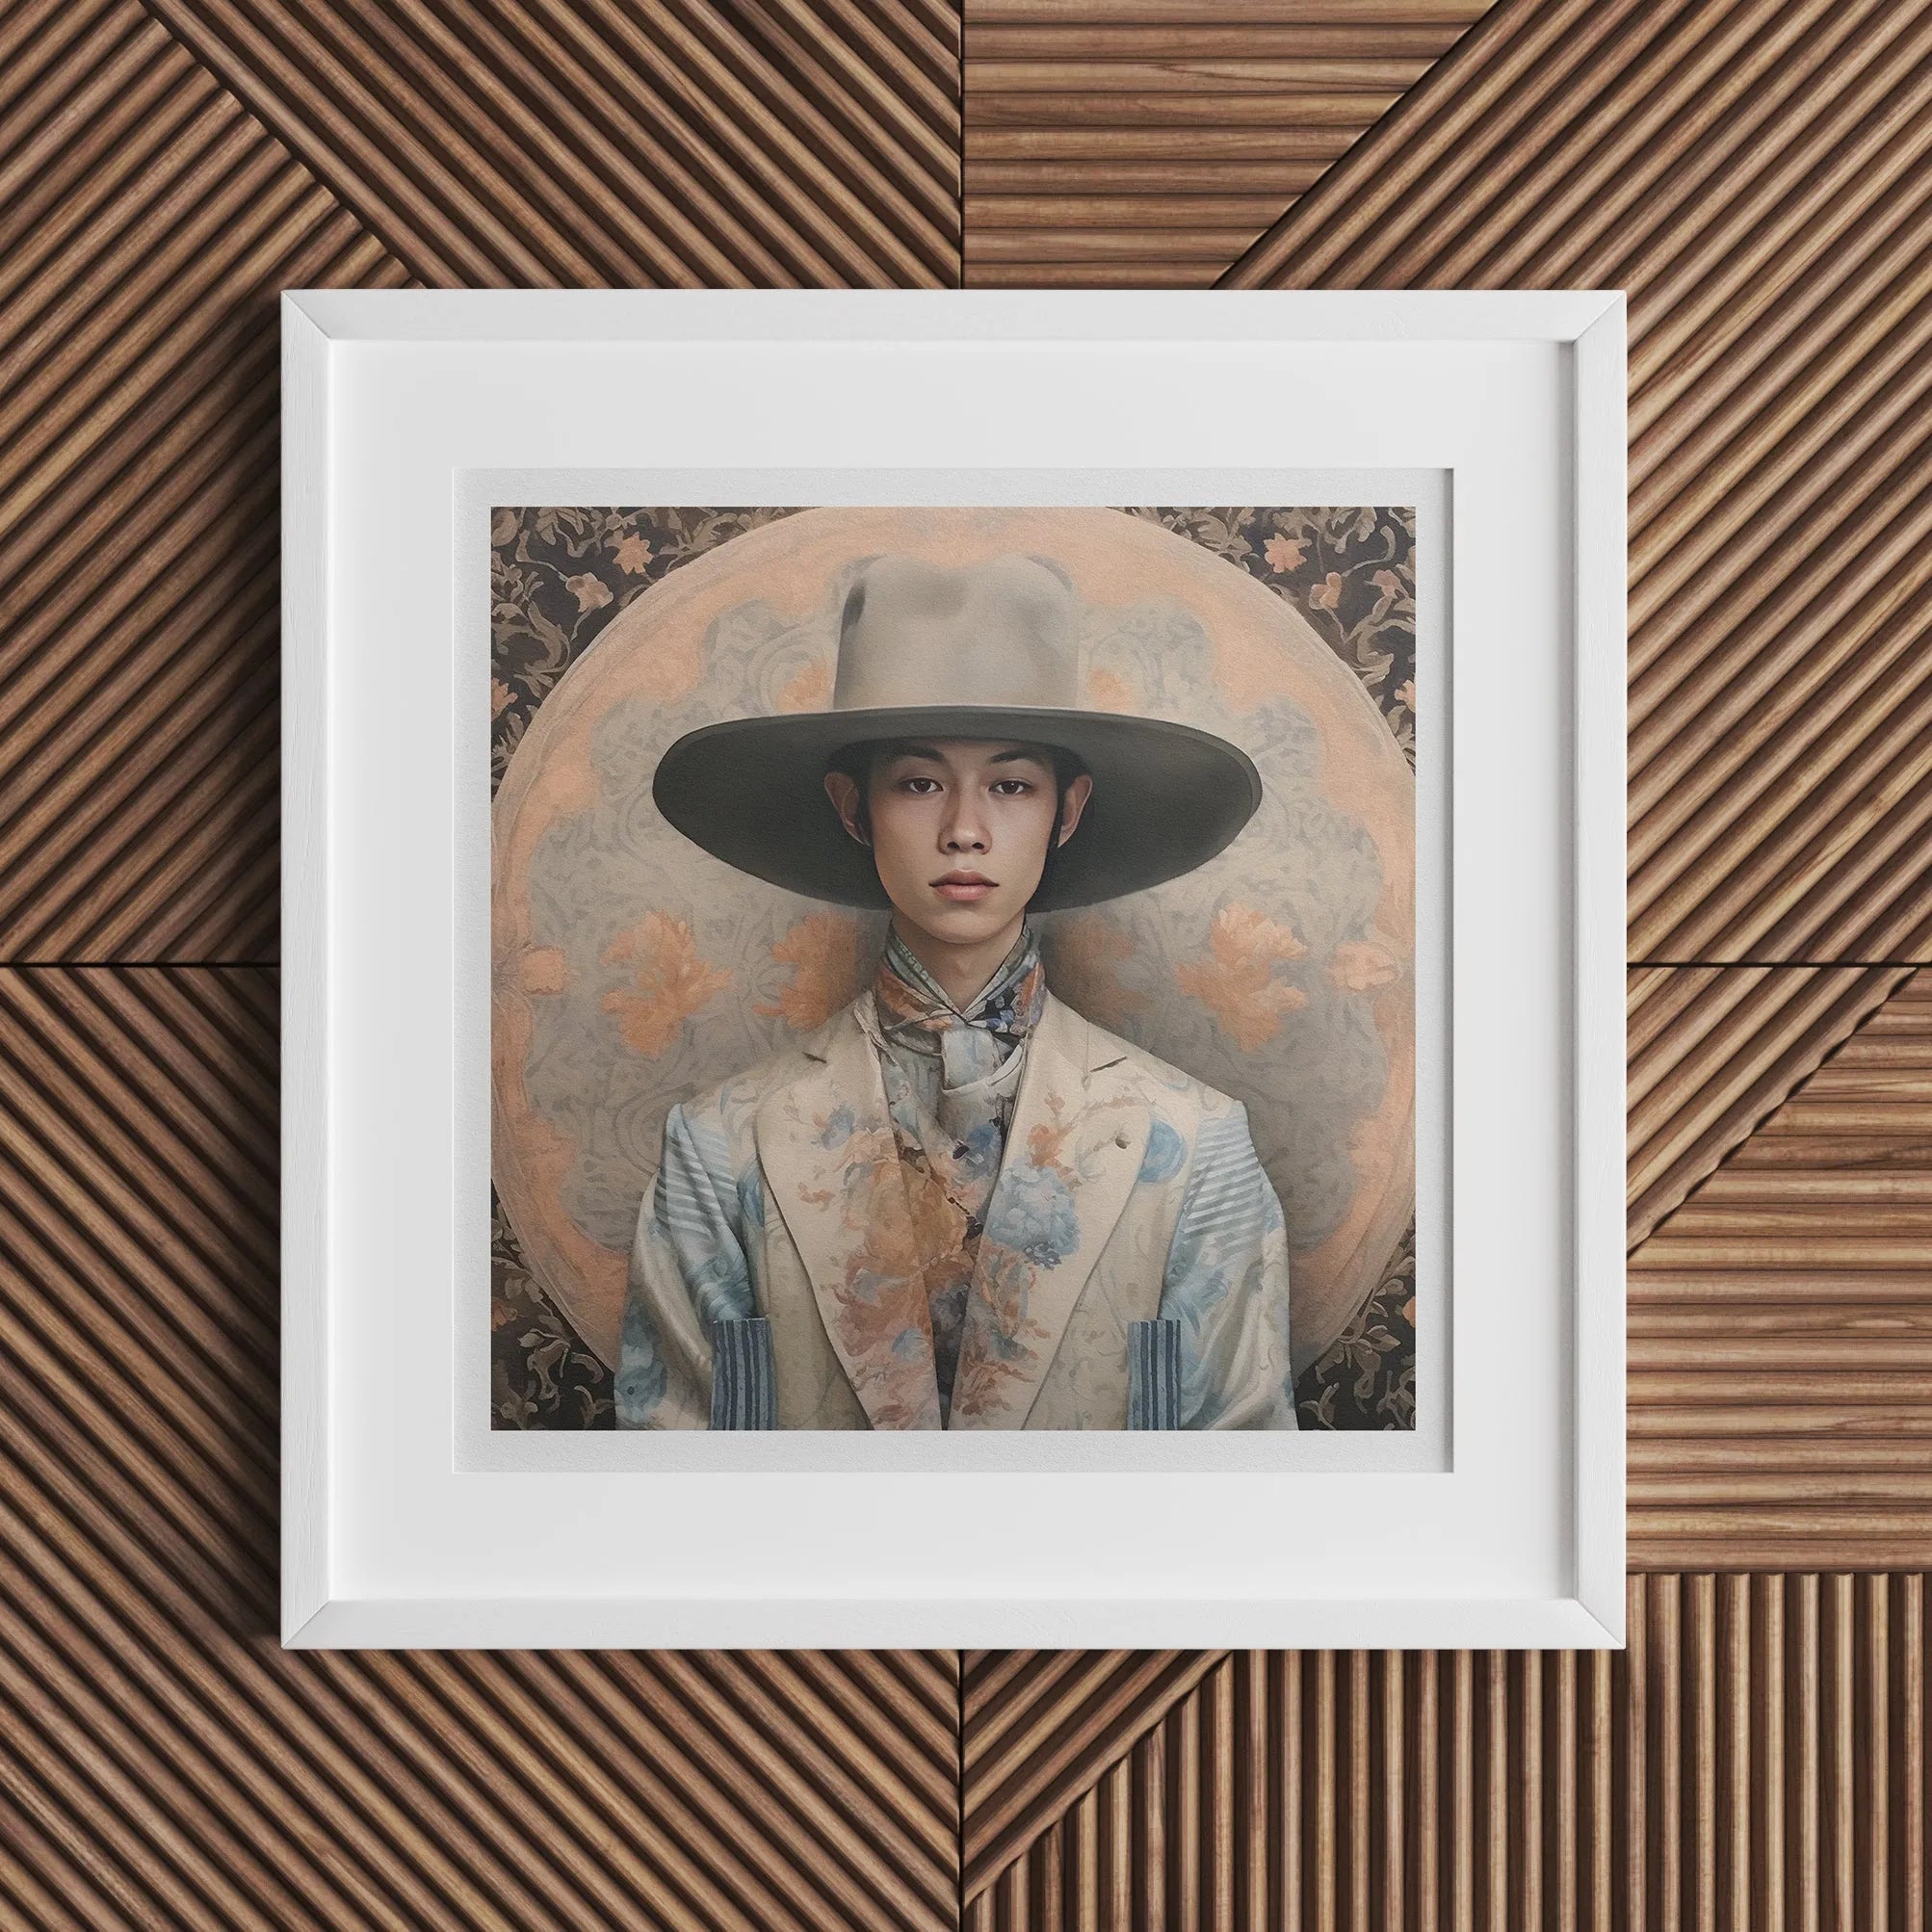 Thuanthong The Transgender Cowboy - Dandy Thai F2m Art Print - 20’x20’ - Posters Prints & Visual Artwork - Aesthetic Art